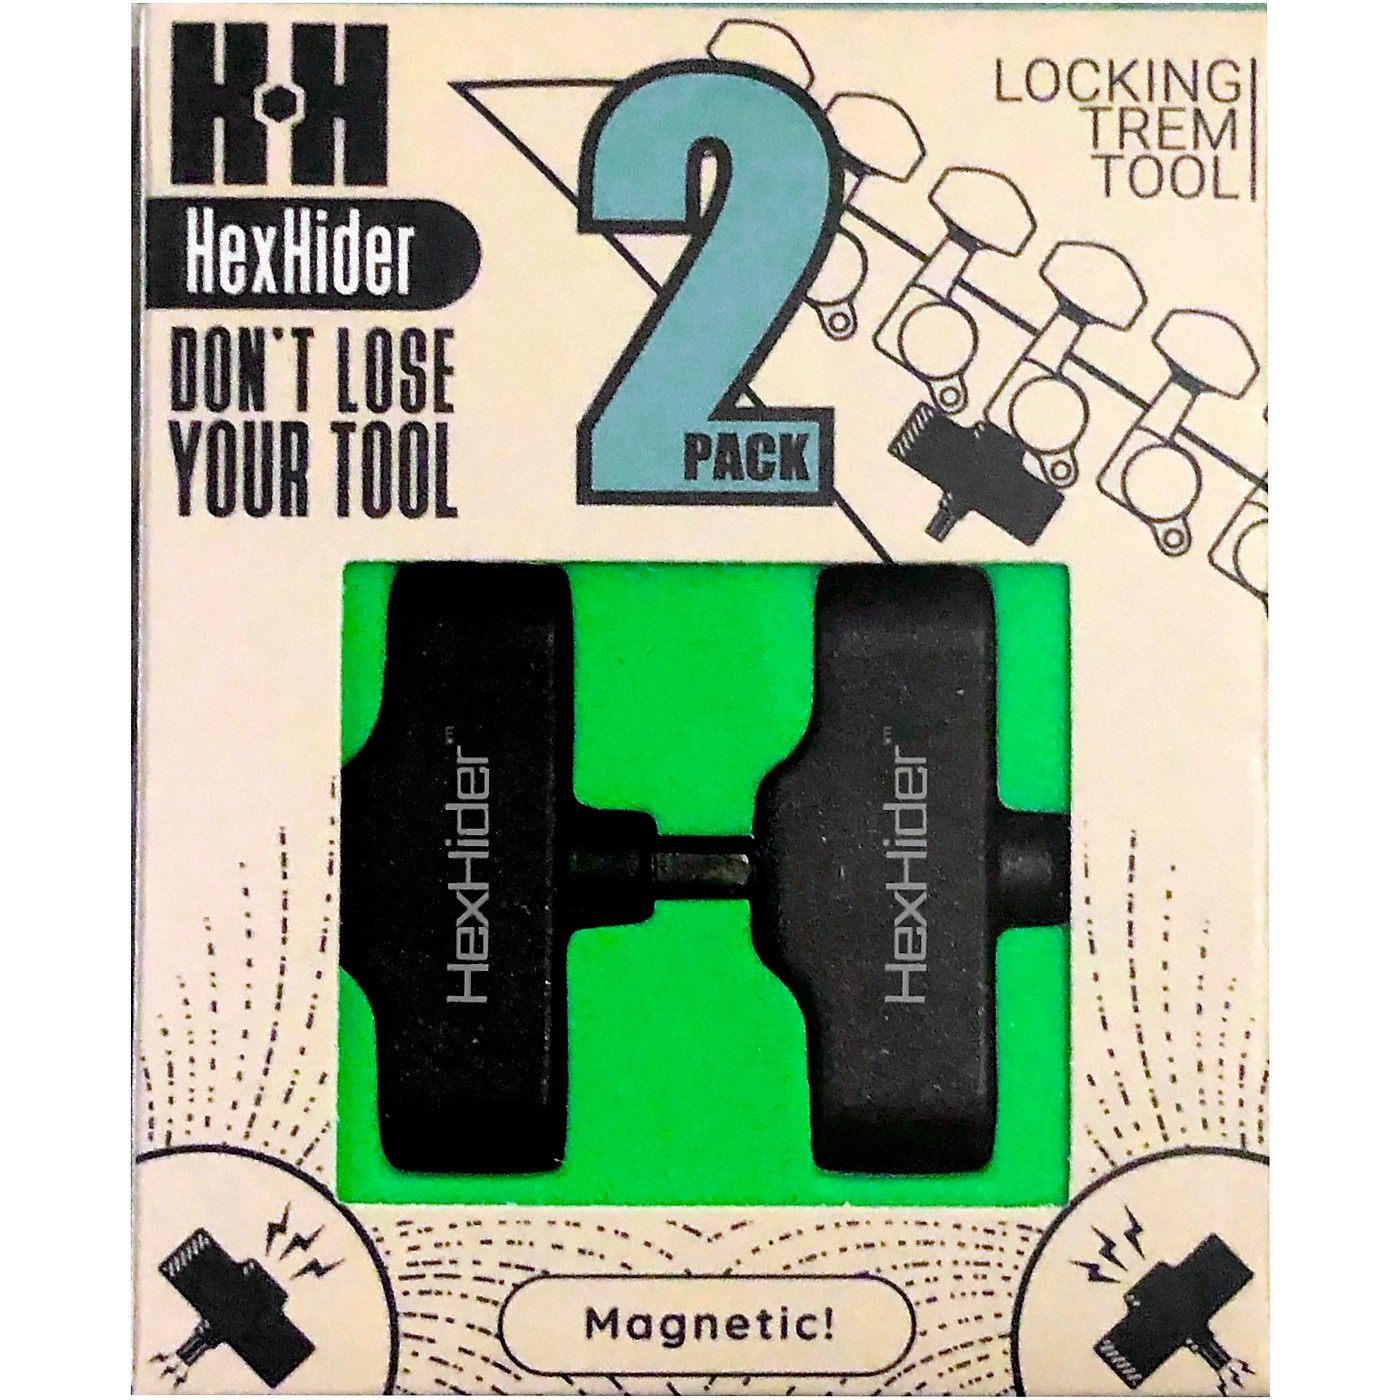 HexHider Magnetic 3mm Allen Wrench - 2 Pack thumbnail